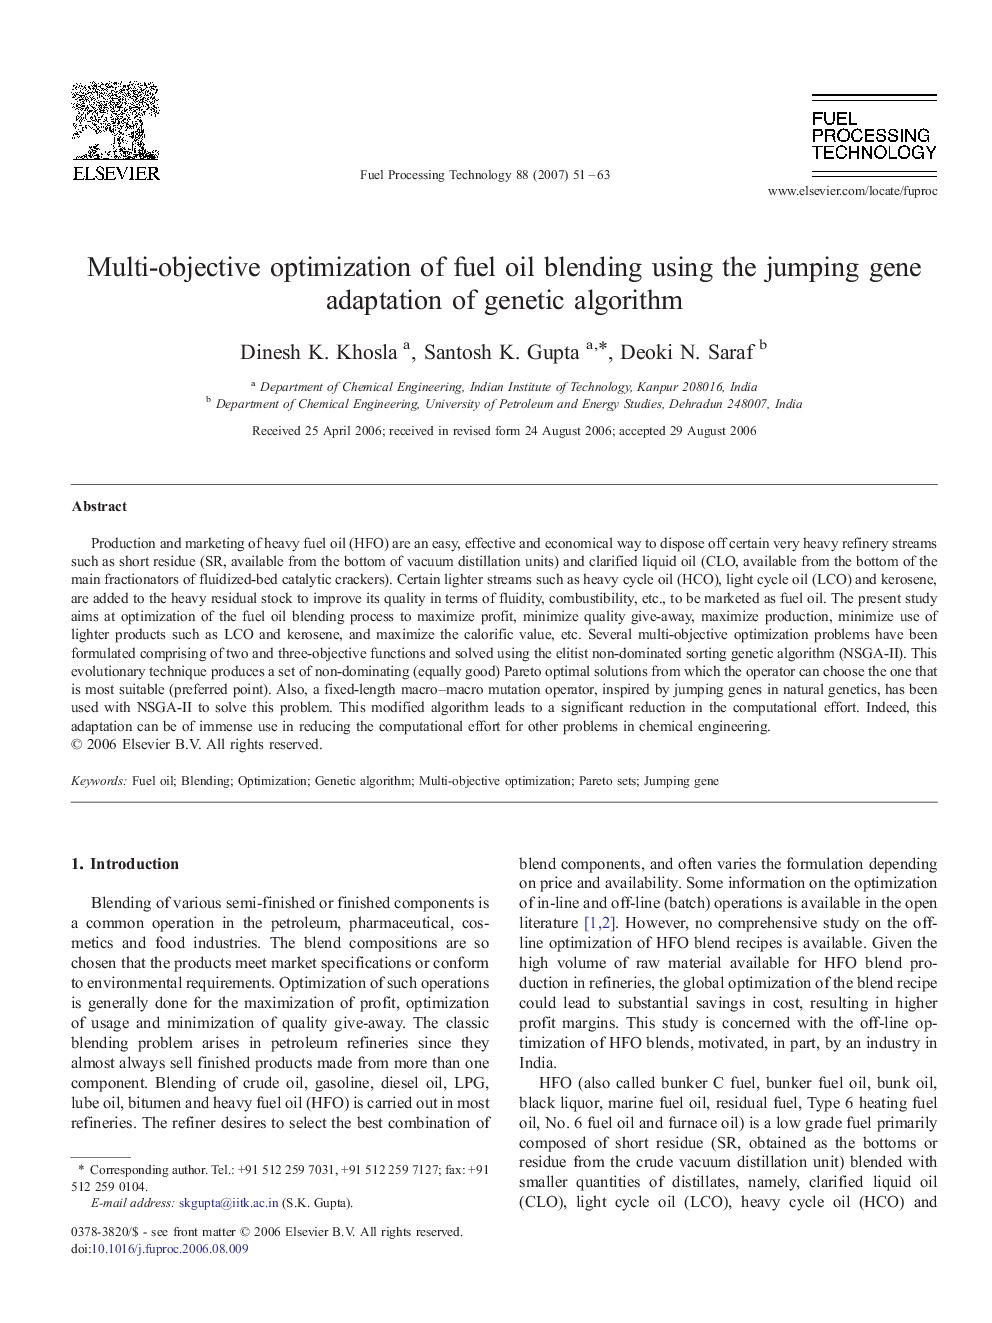 Multi-objective optimization of fuel oil blending using the jumping gene adaptation of genetic algorithm